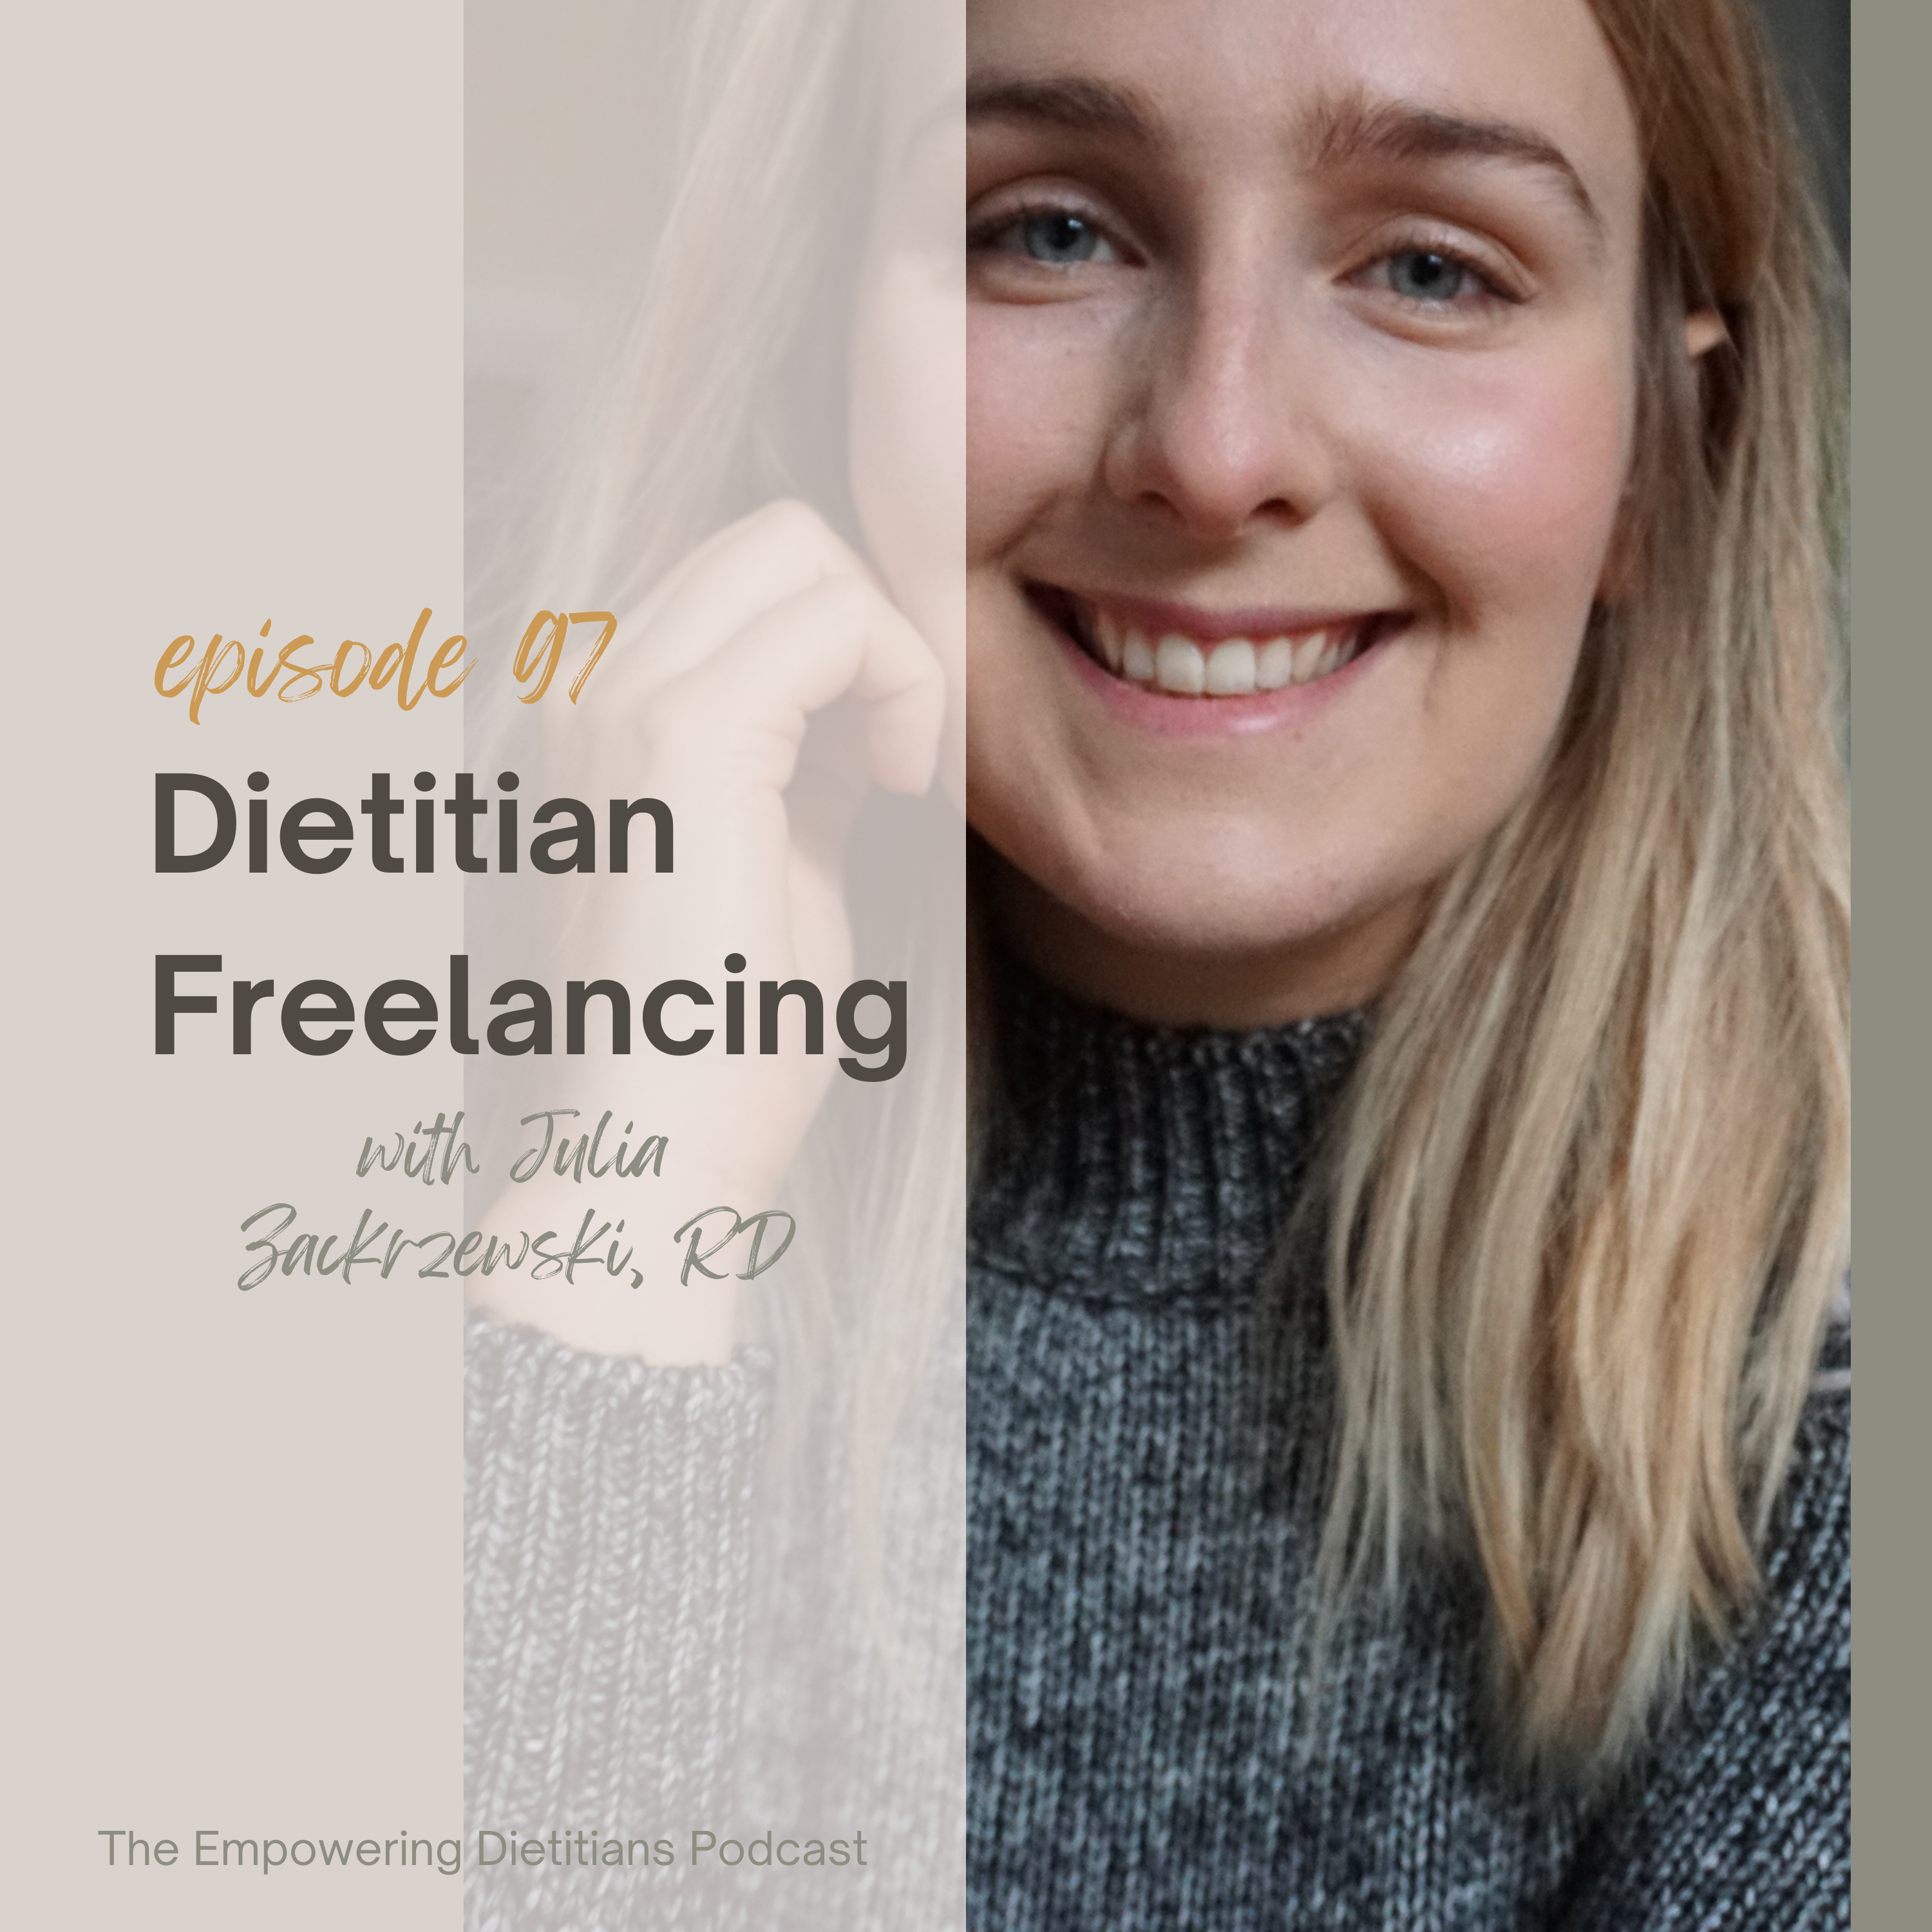 dietitian freelancing with julia zakrzewski